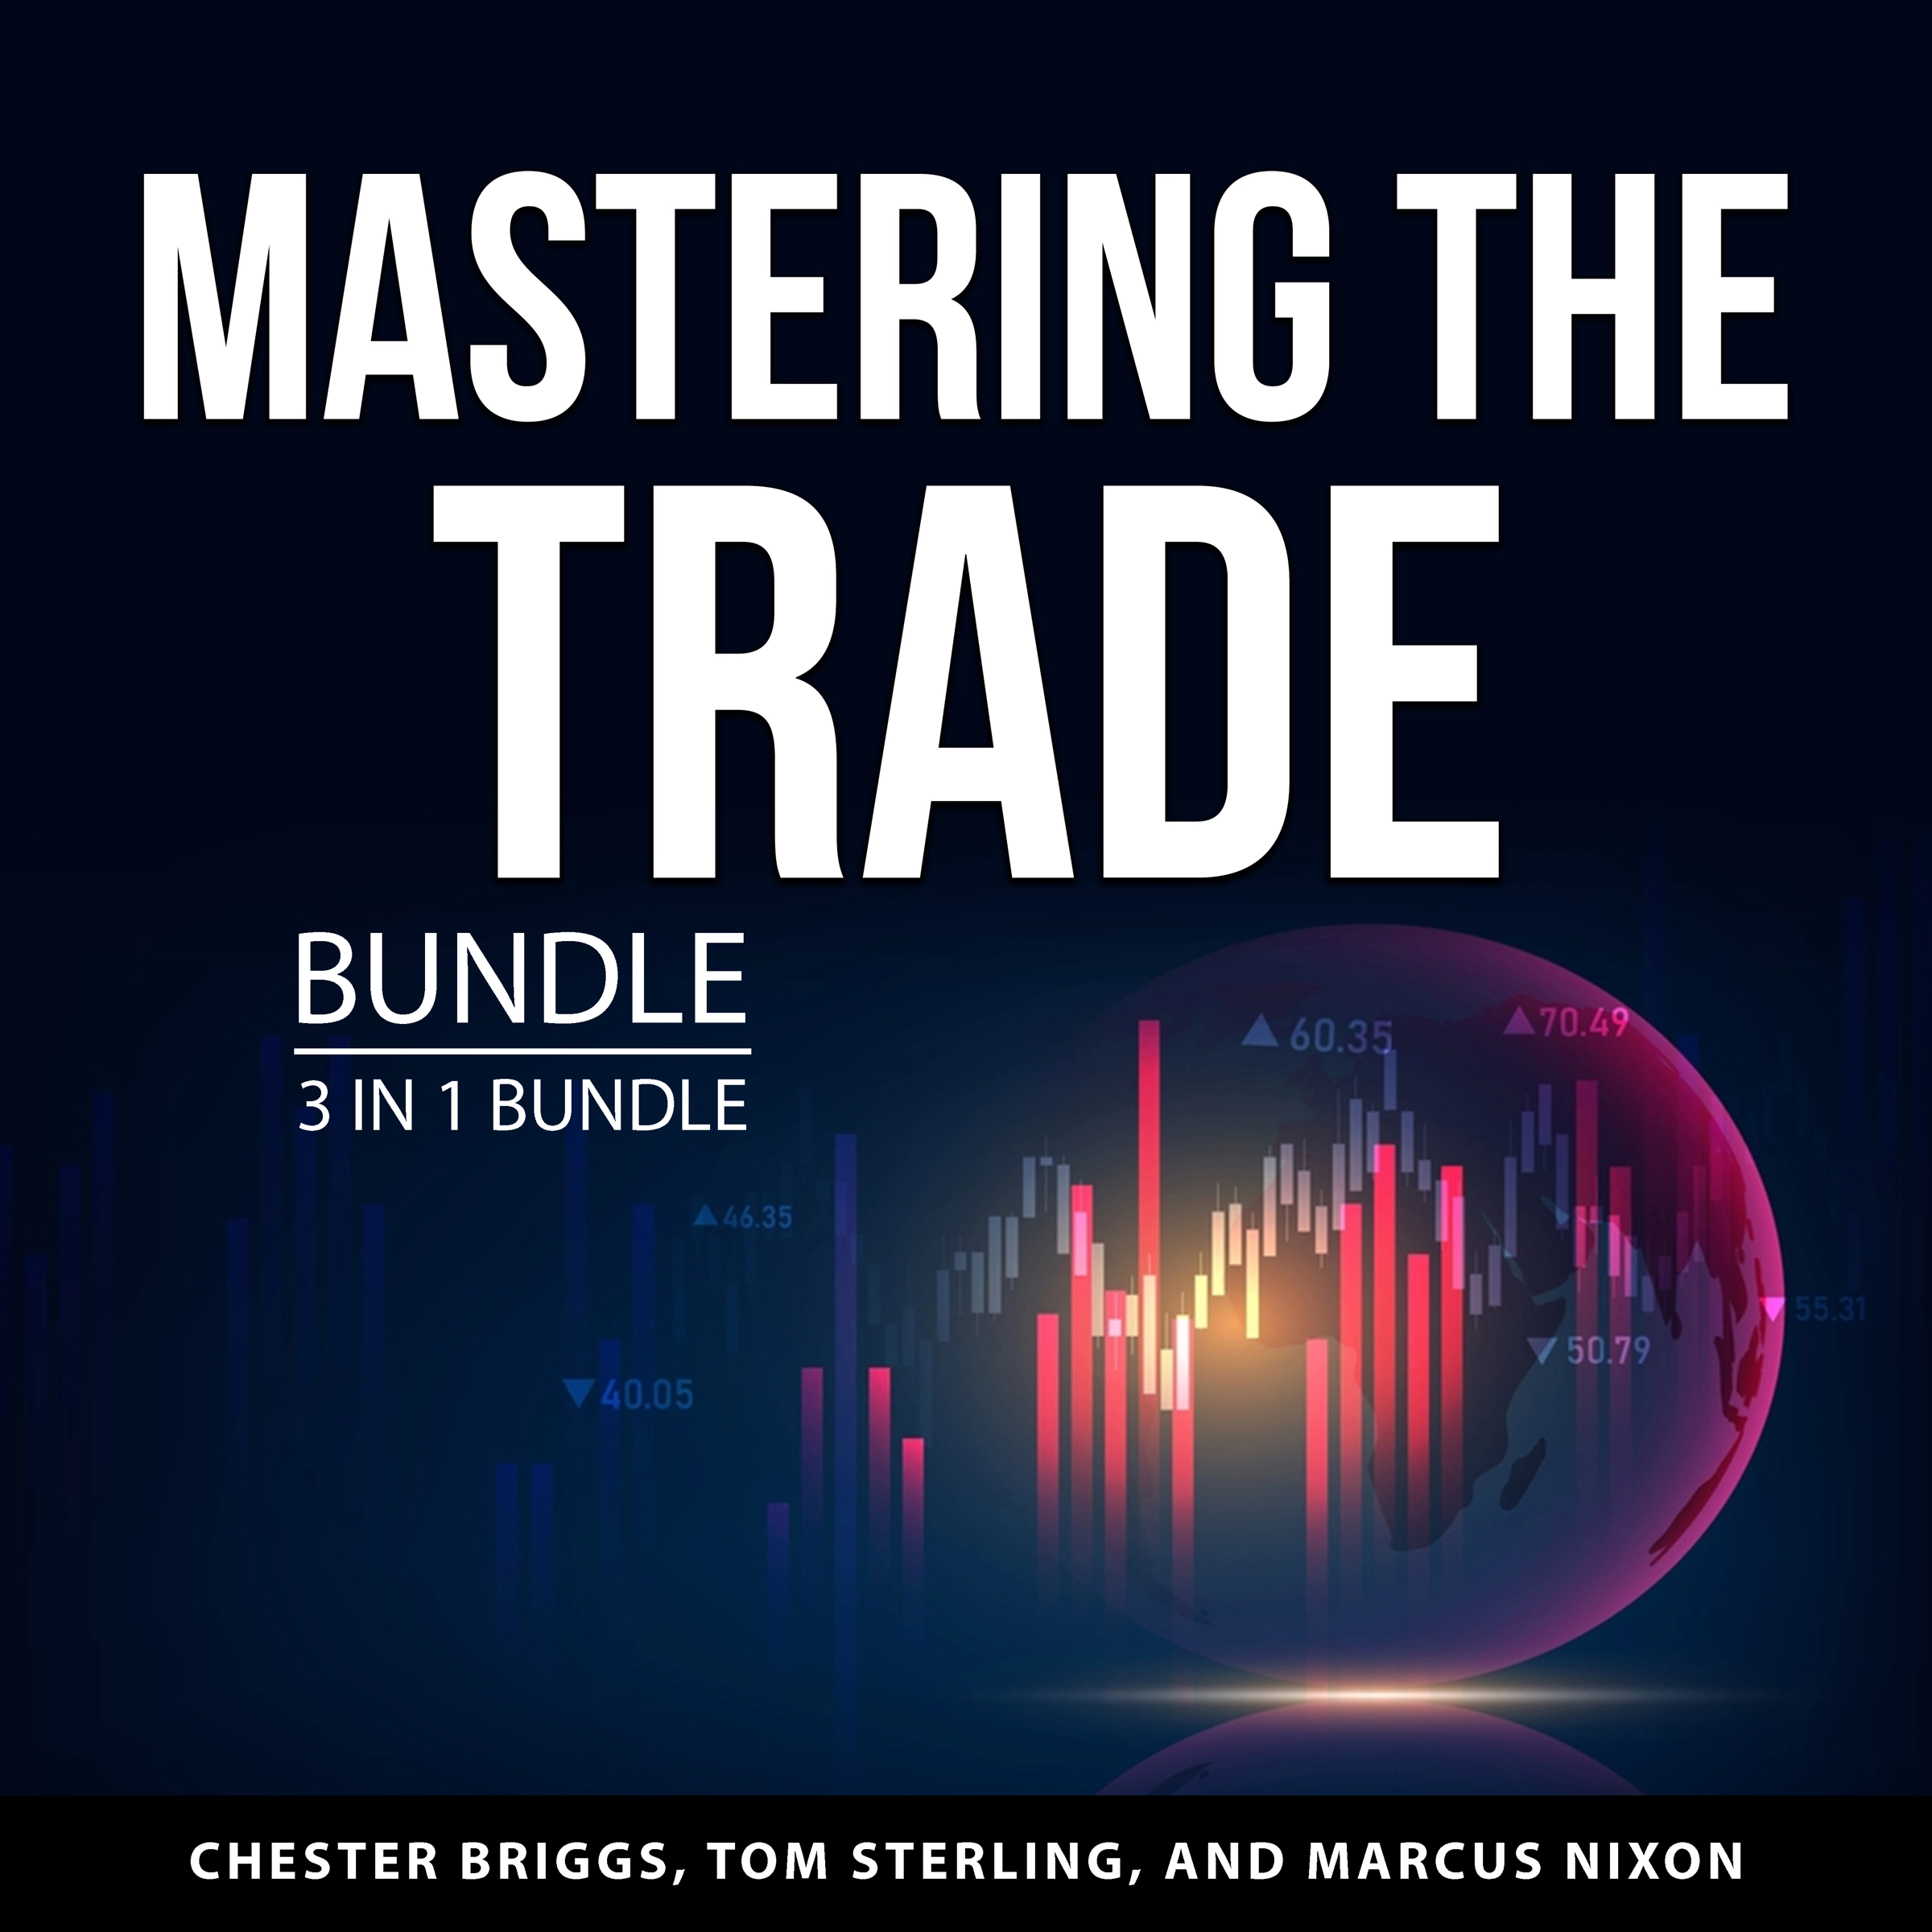 Mastering the Trade Bundle, 3 in 1 Bundle by Marcus Nixon Audiobook